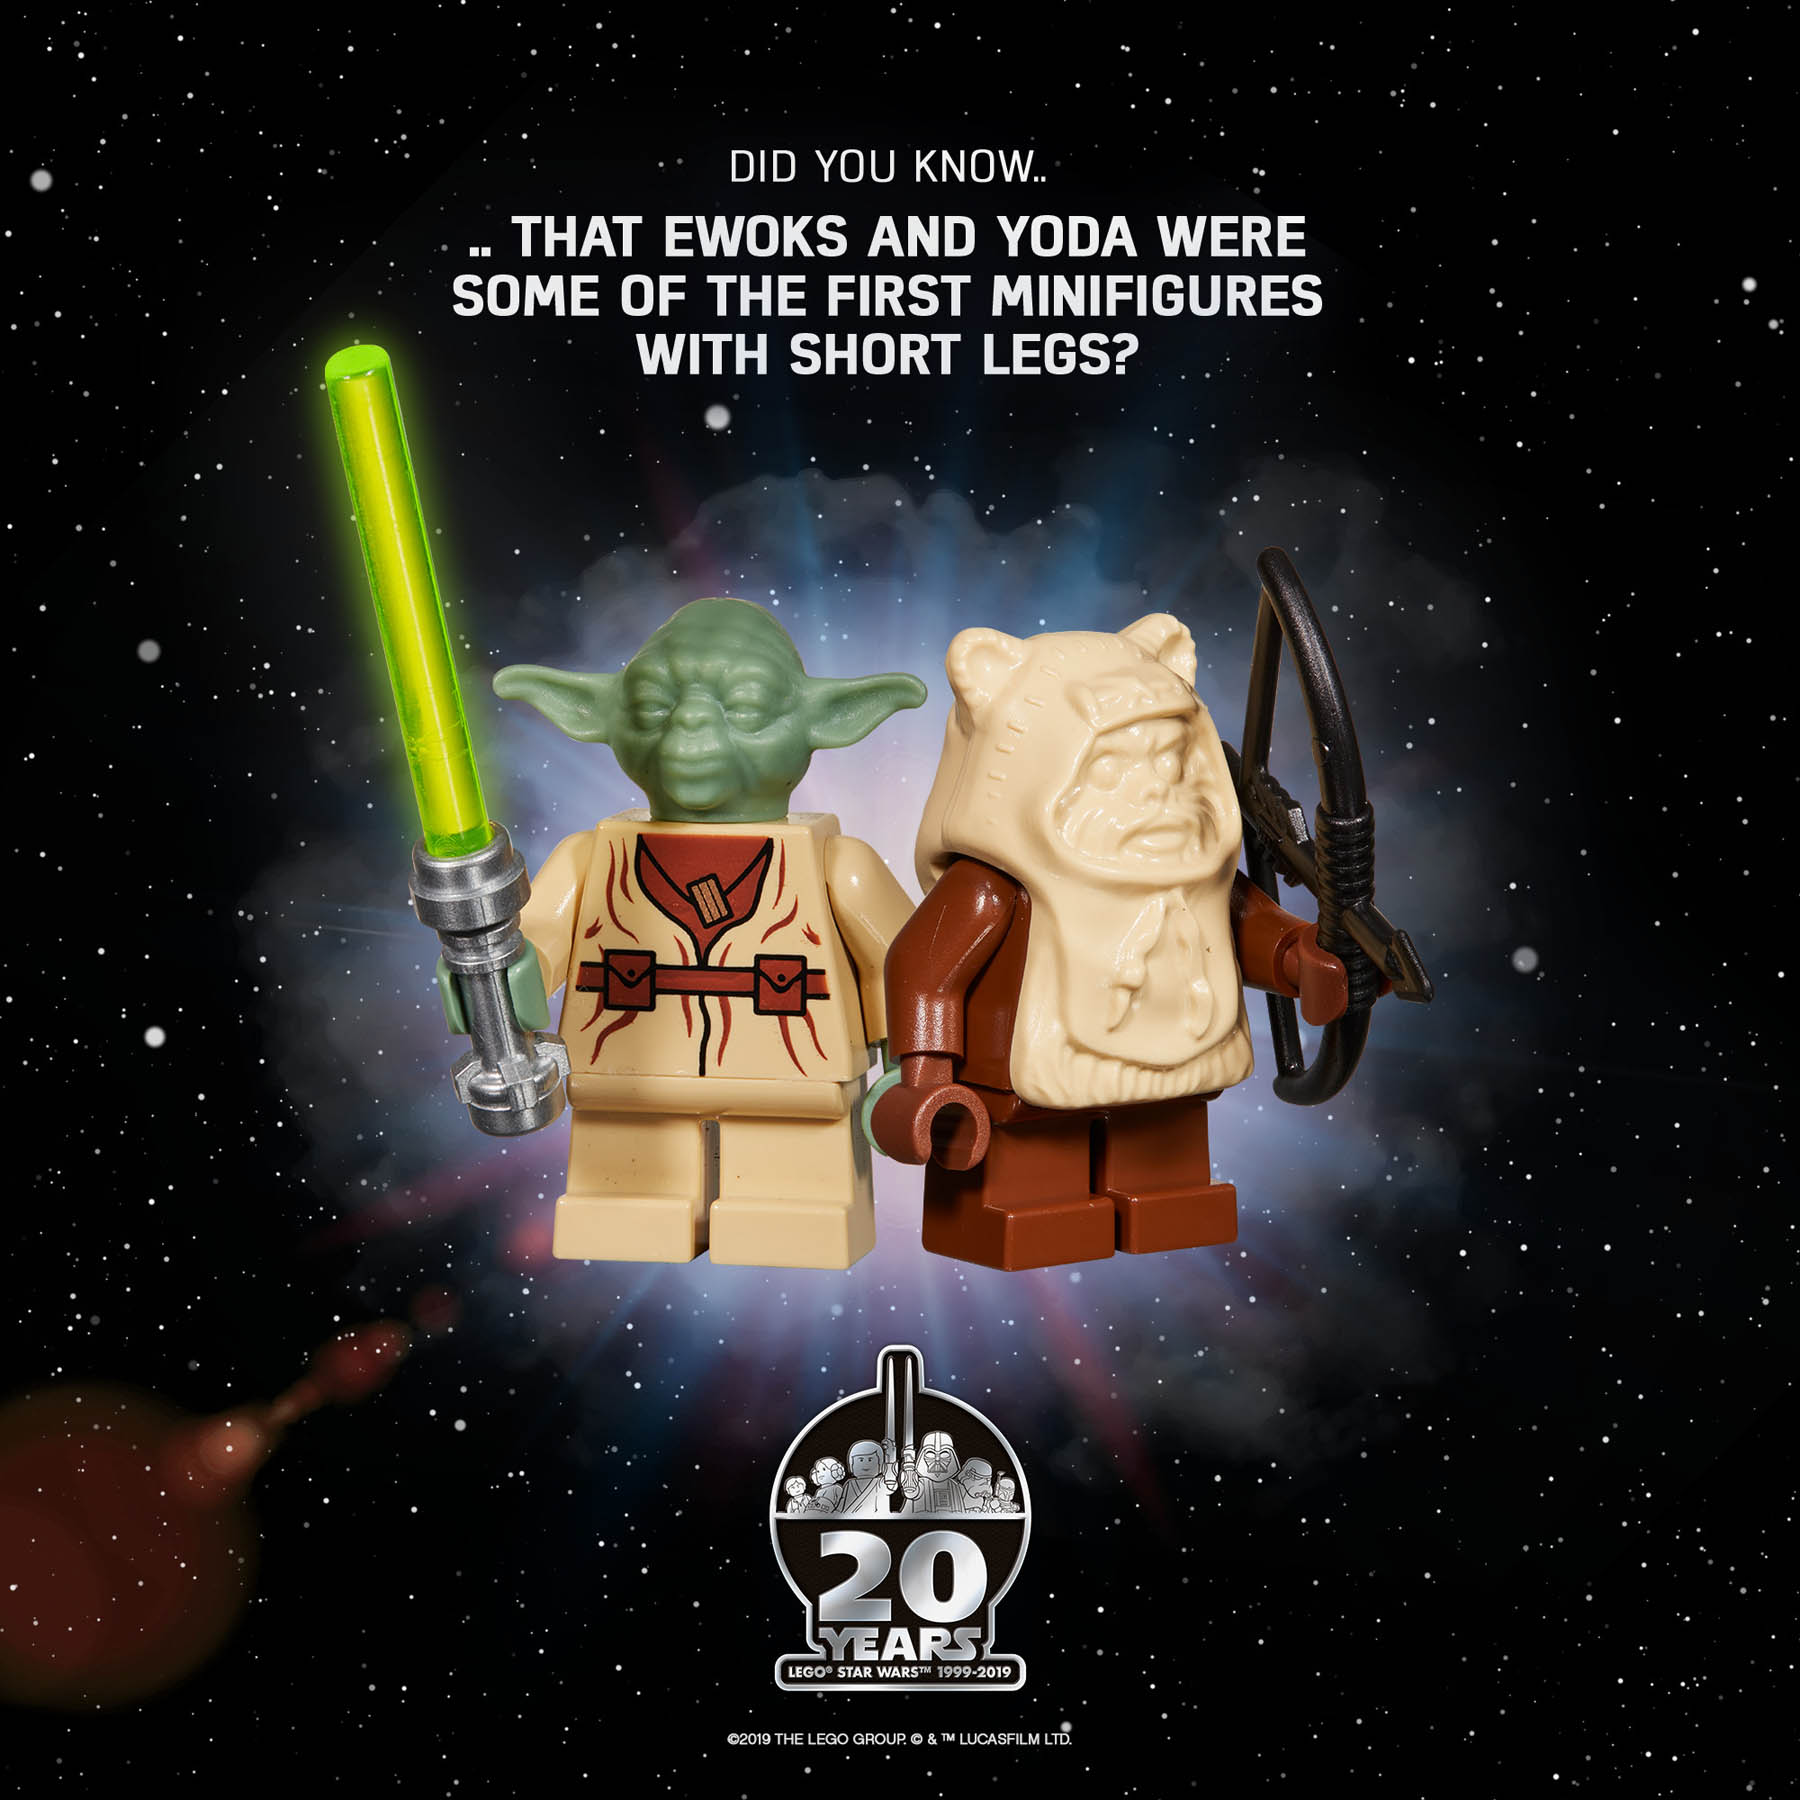 The LEGO Star Wars 20th Anniversary Post - FBTB